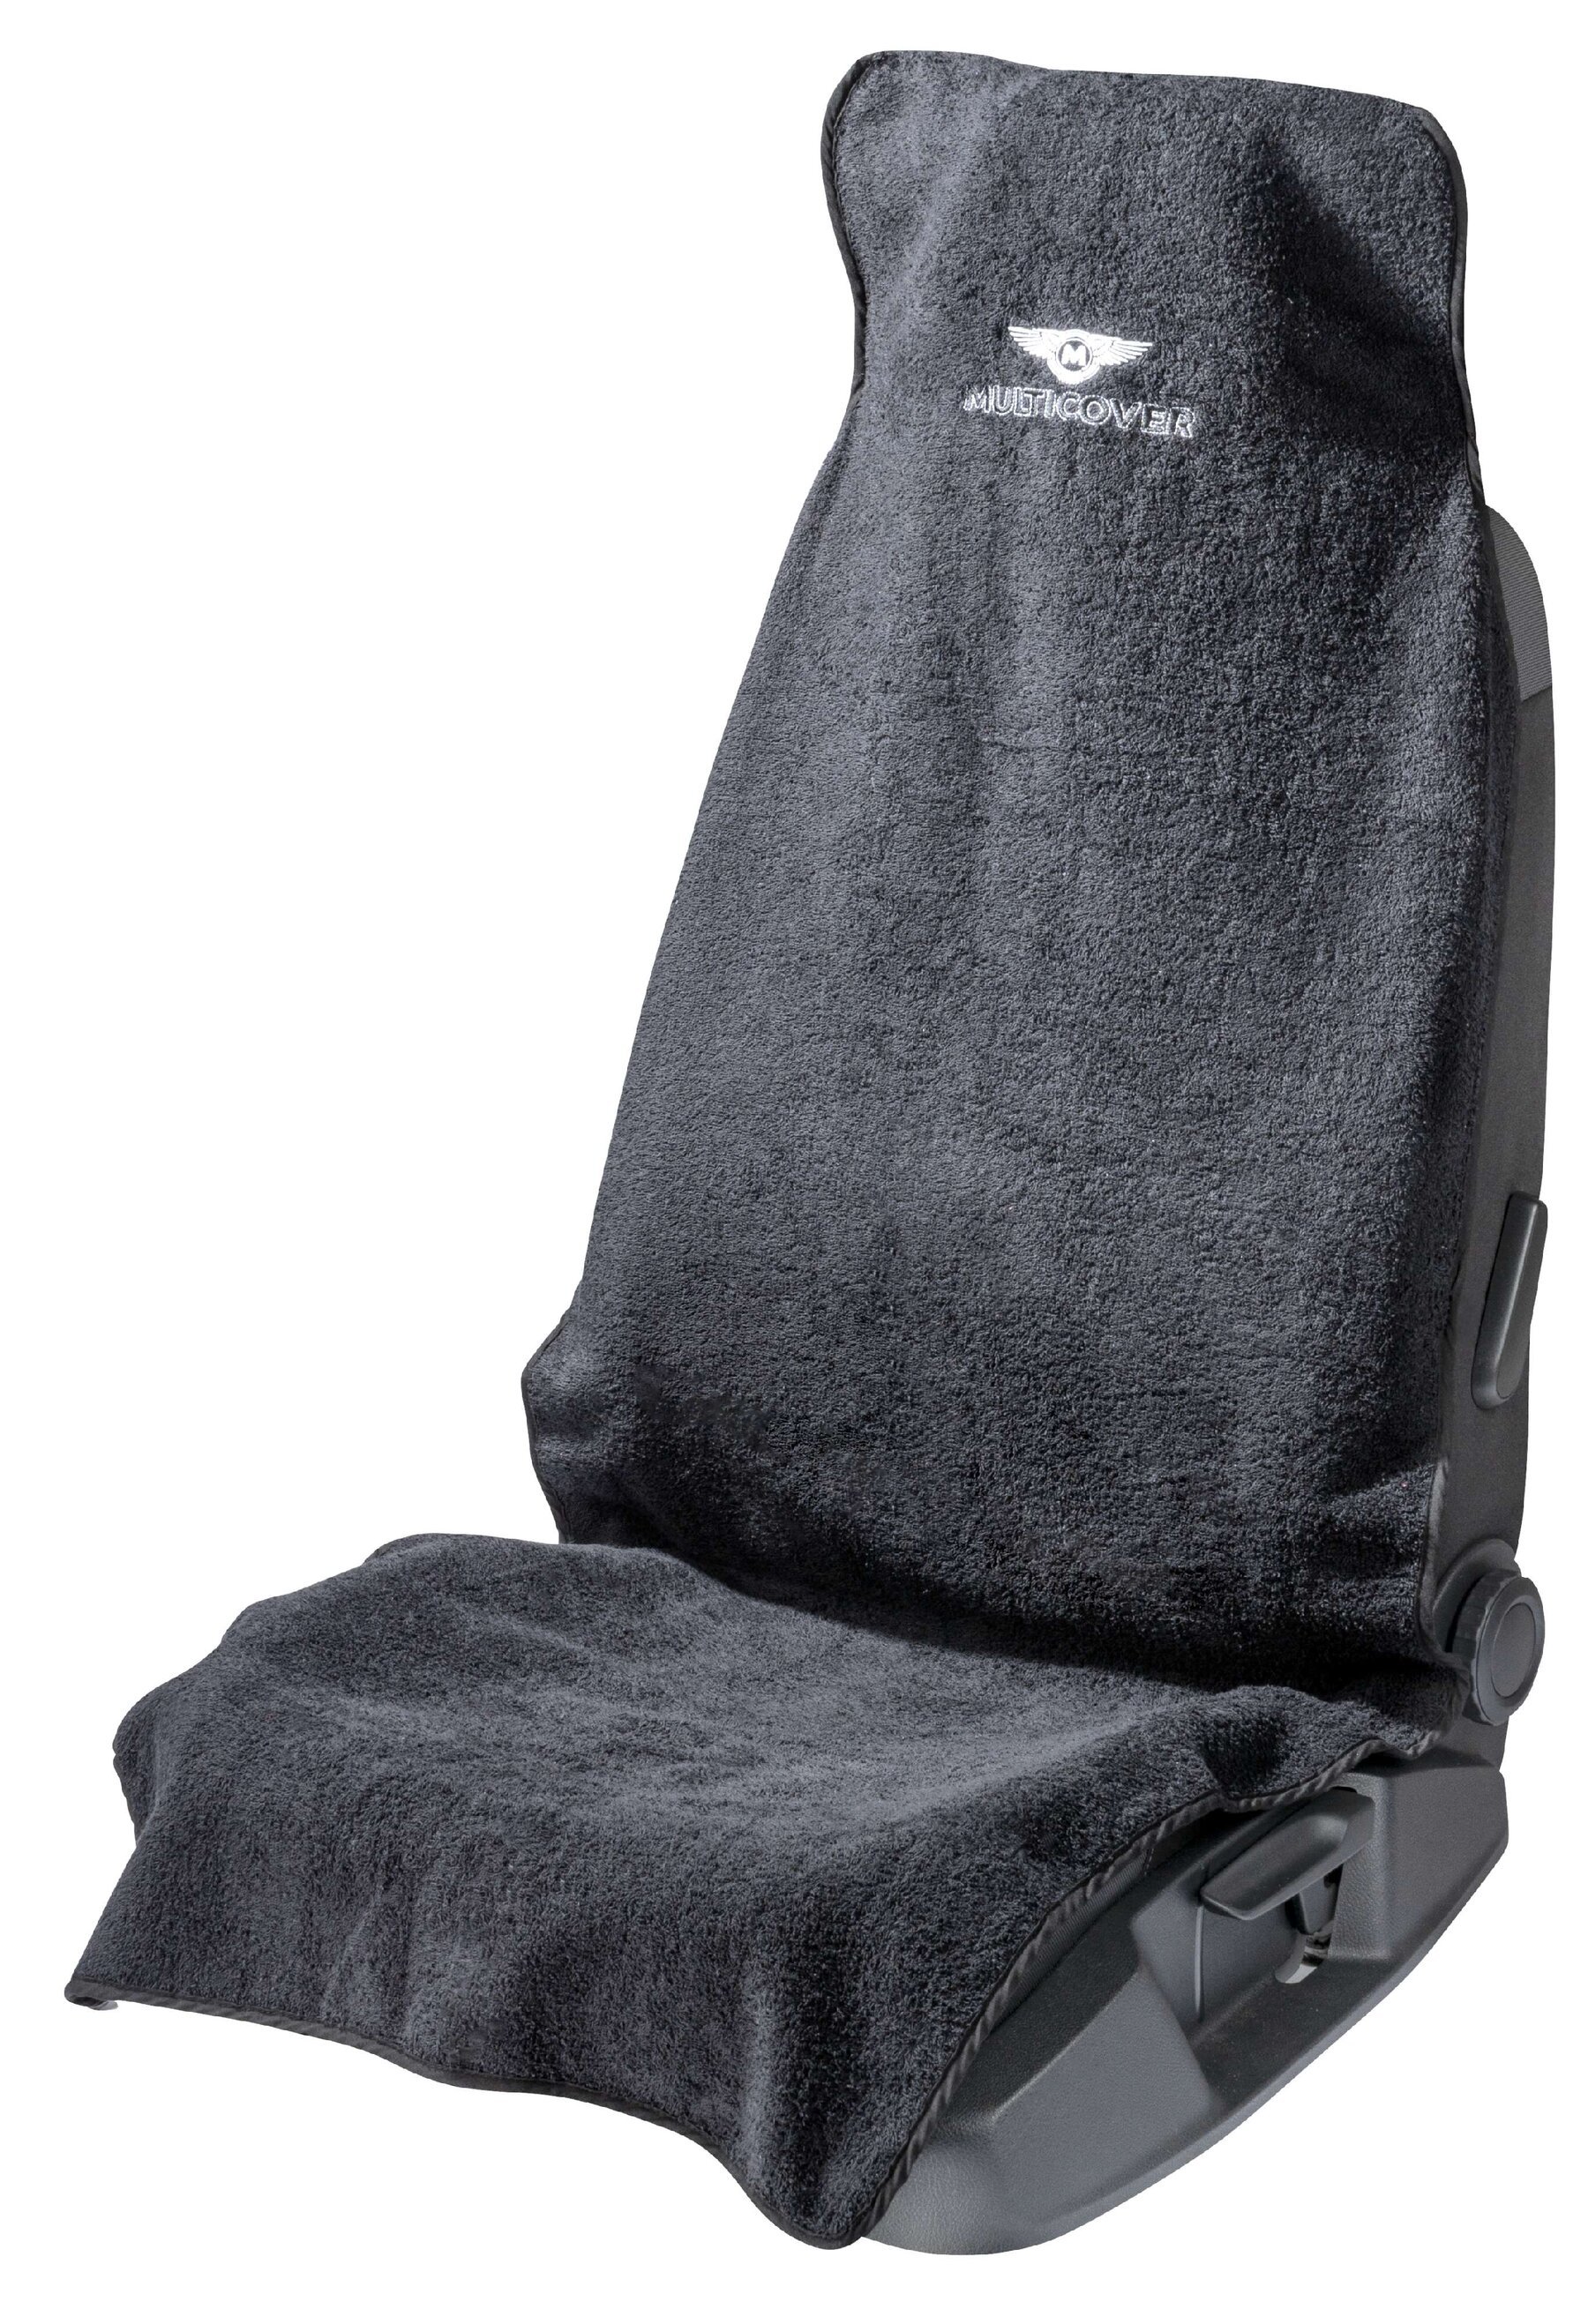 Car Seat cover Multicover black